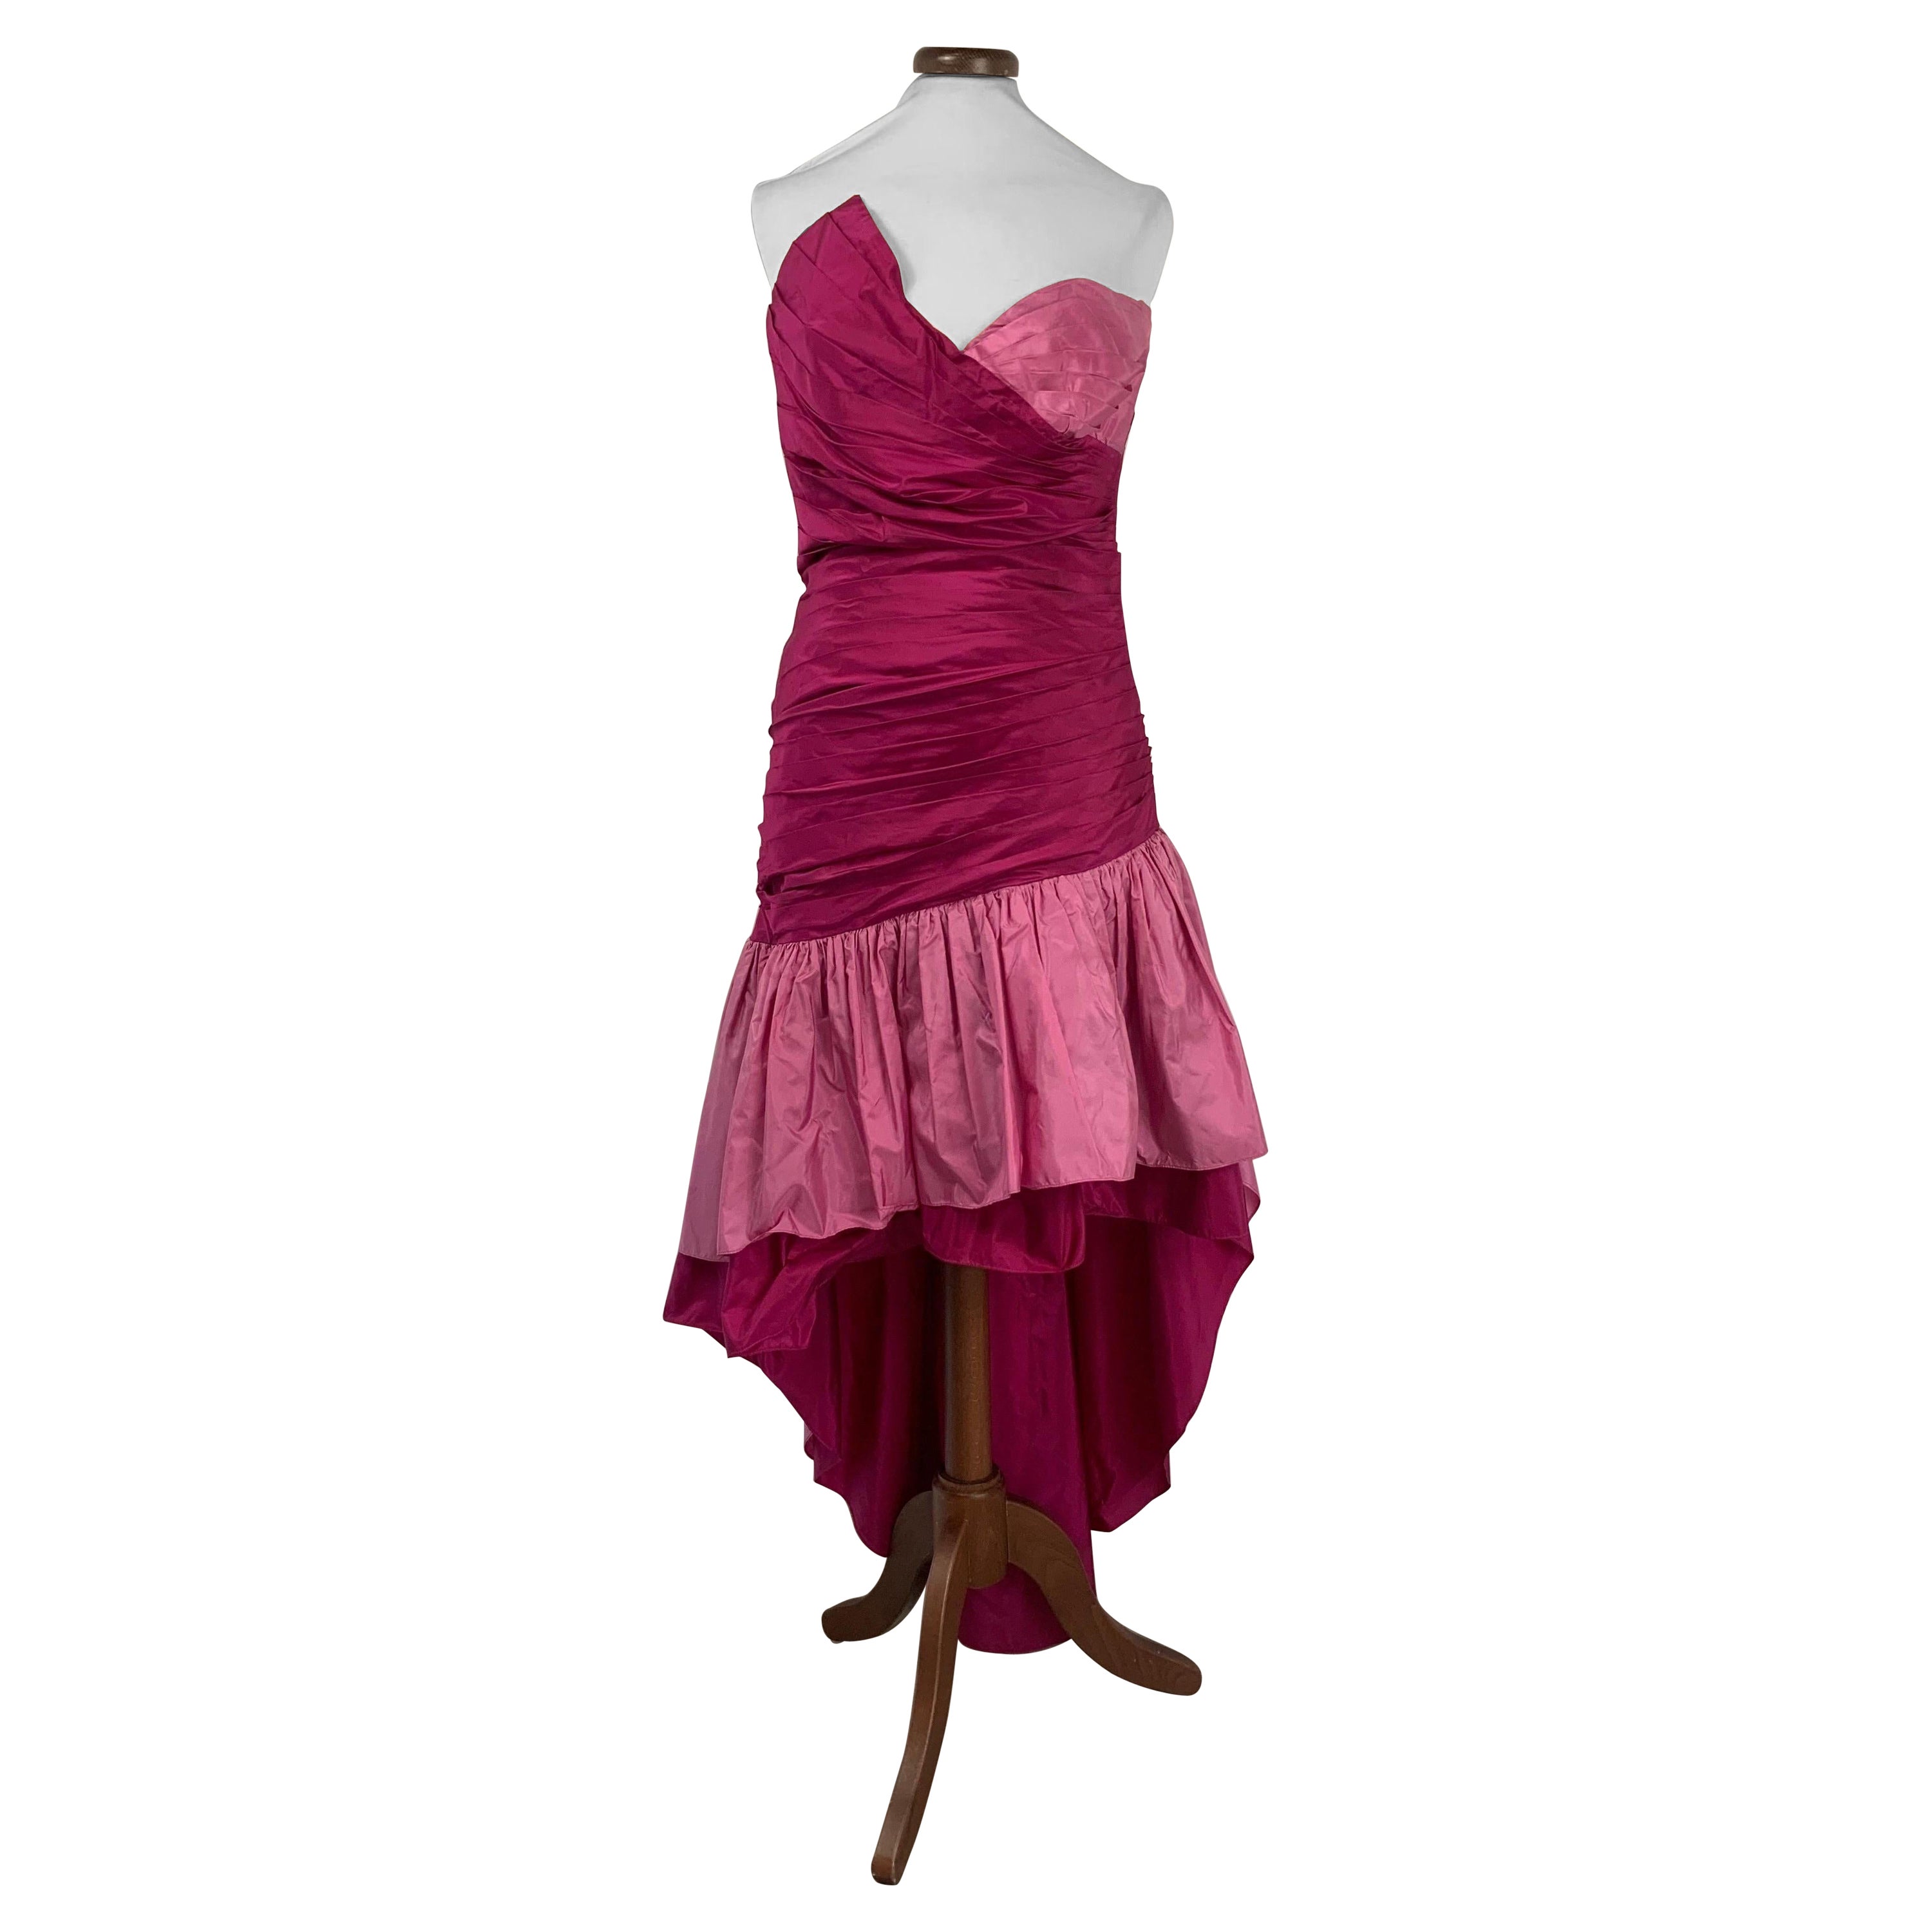 Roxy vintage night pink dress For Sale